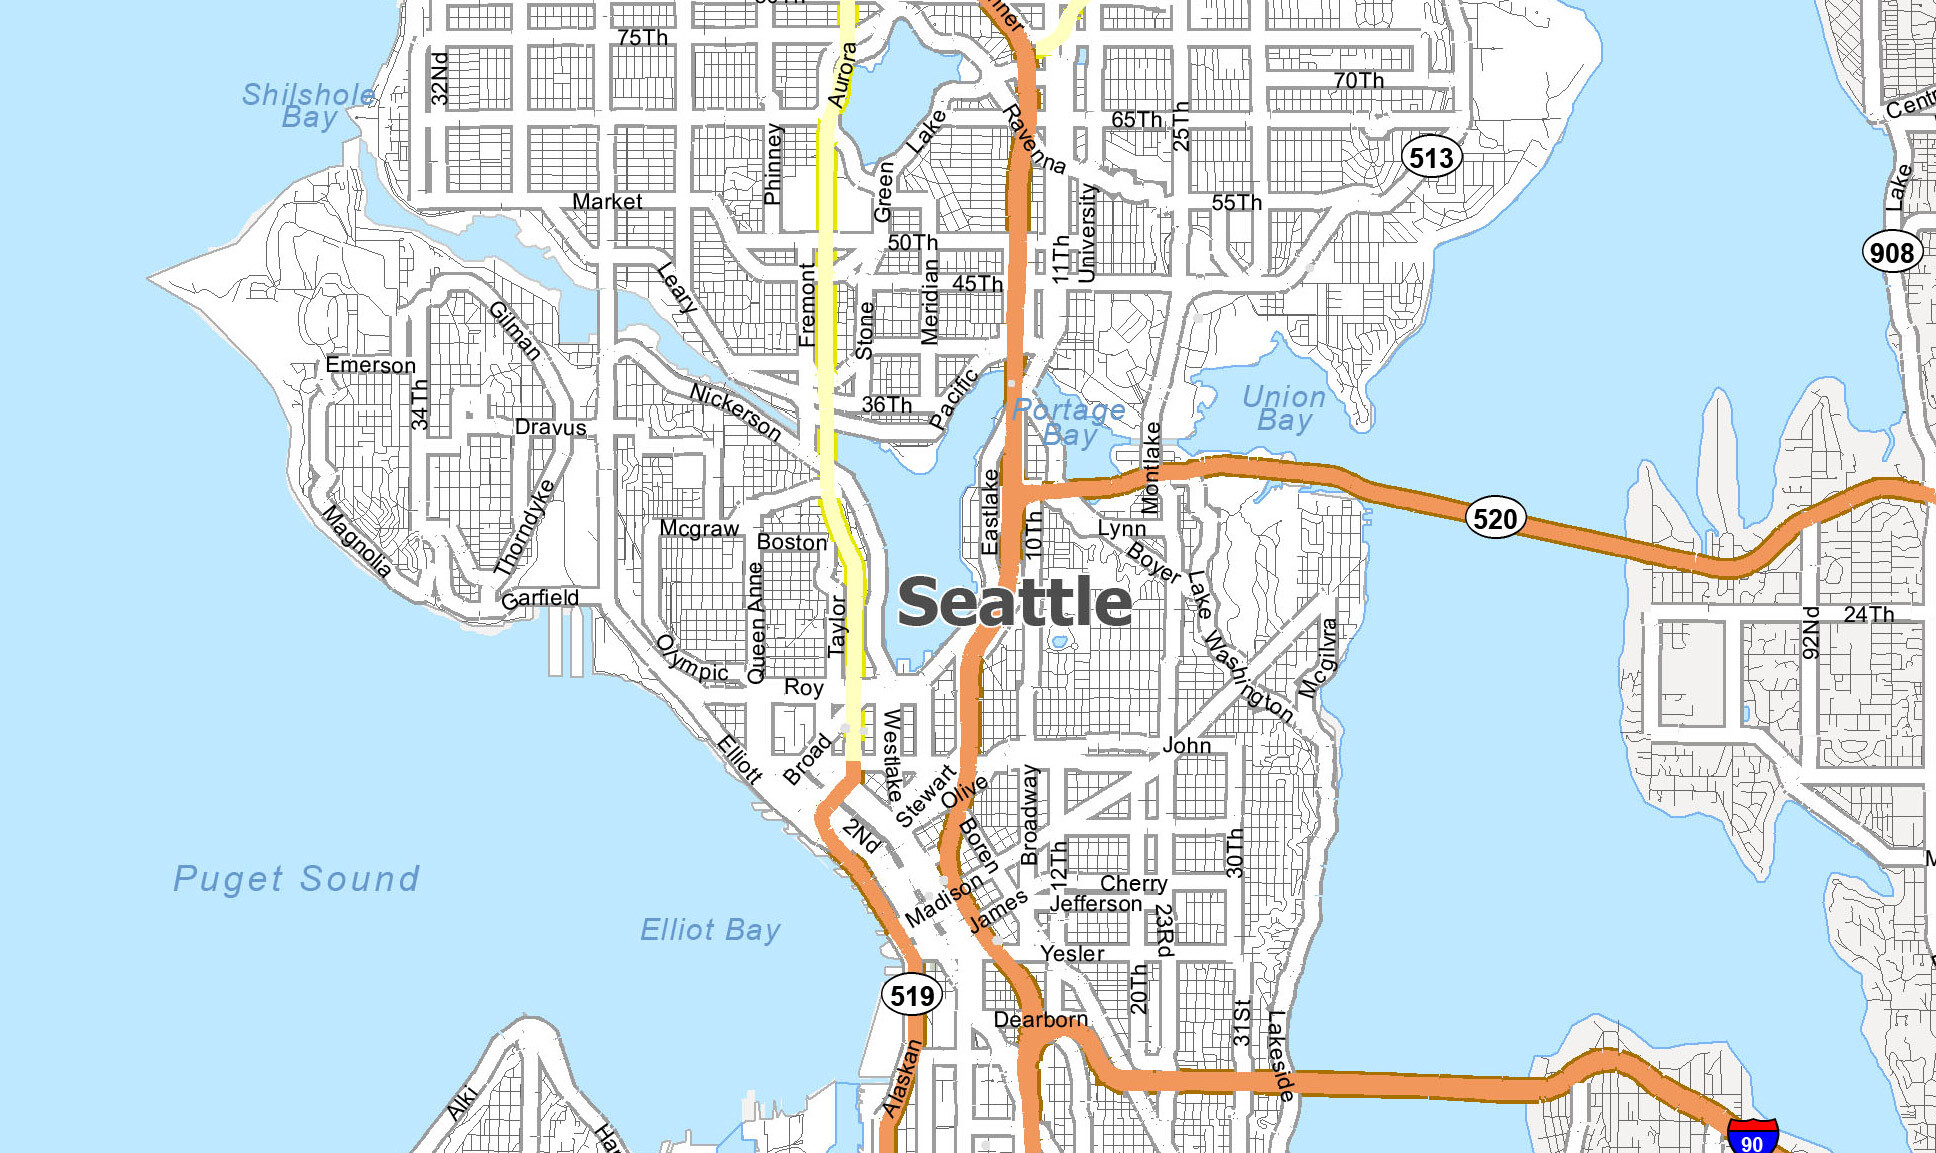 Map of Seattle, Washington - GIS Geography